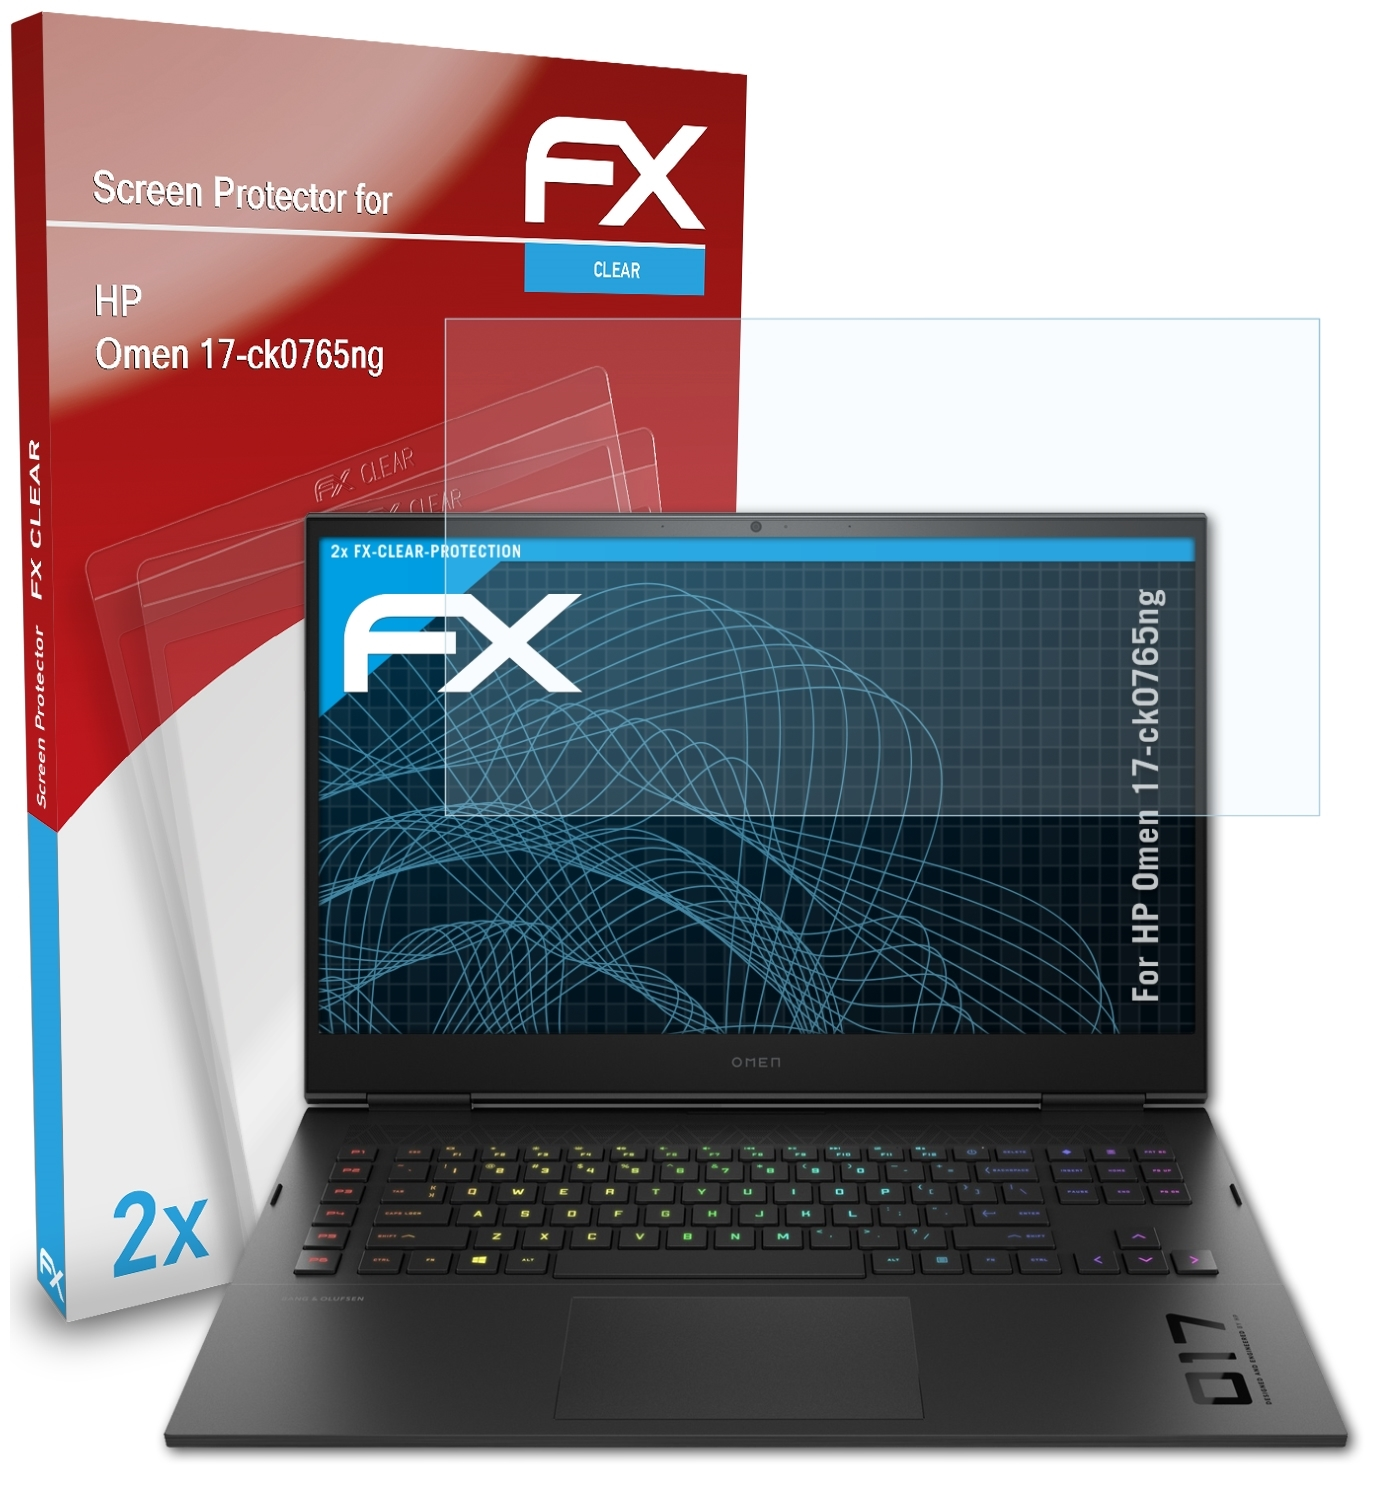 ATFOLIX 2x 17-ck0765ng) Omen HP FX-Clear Displayschutz(für